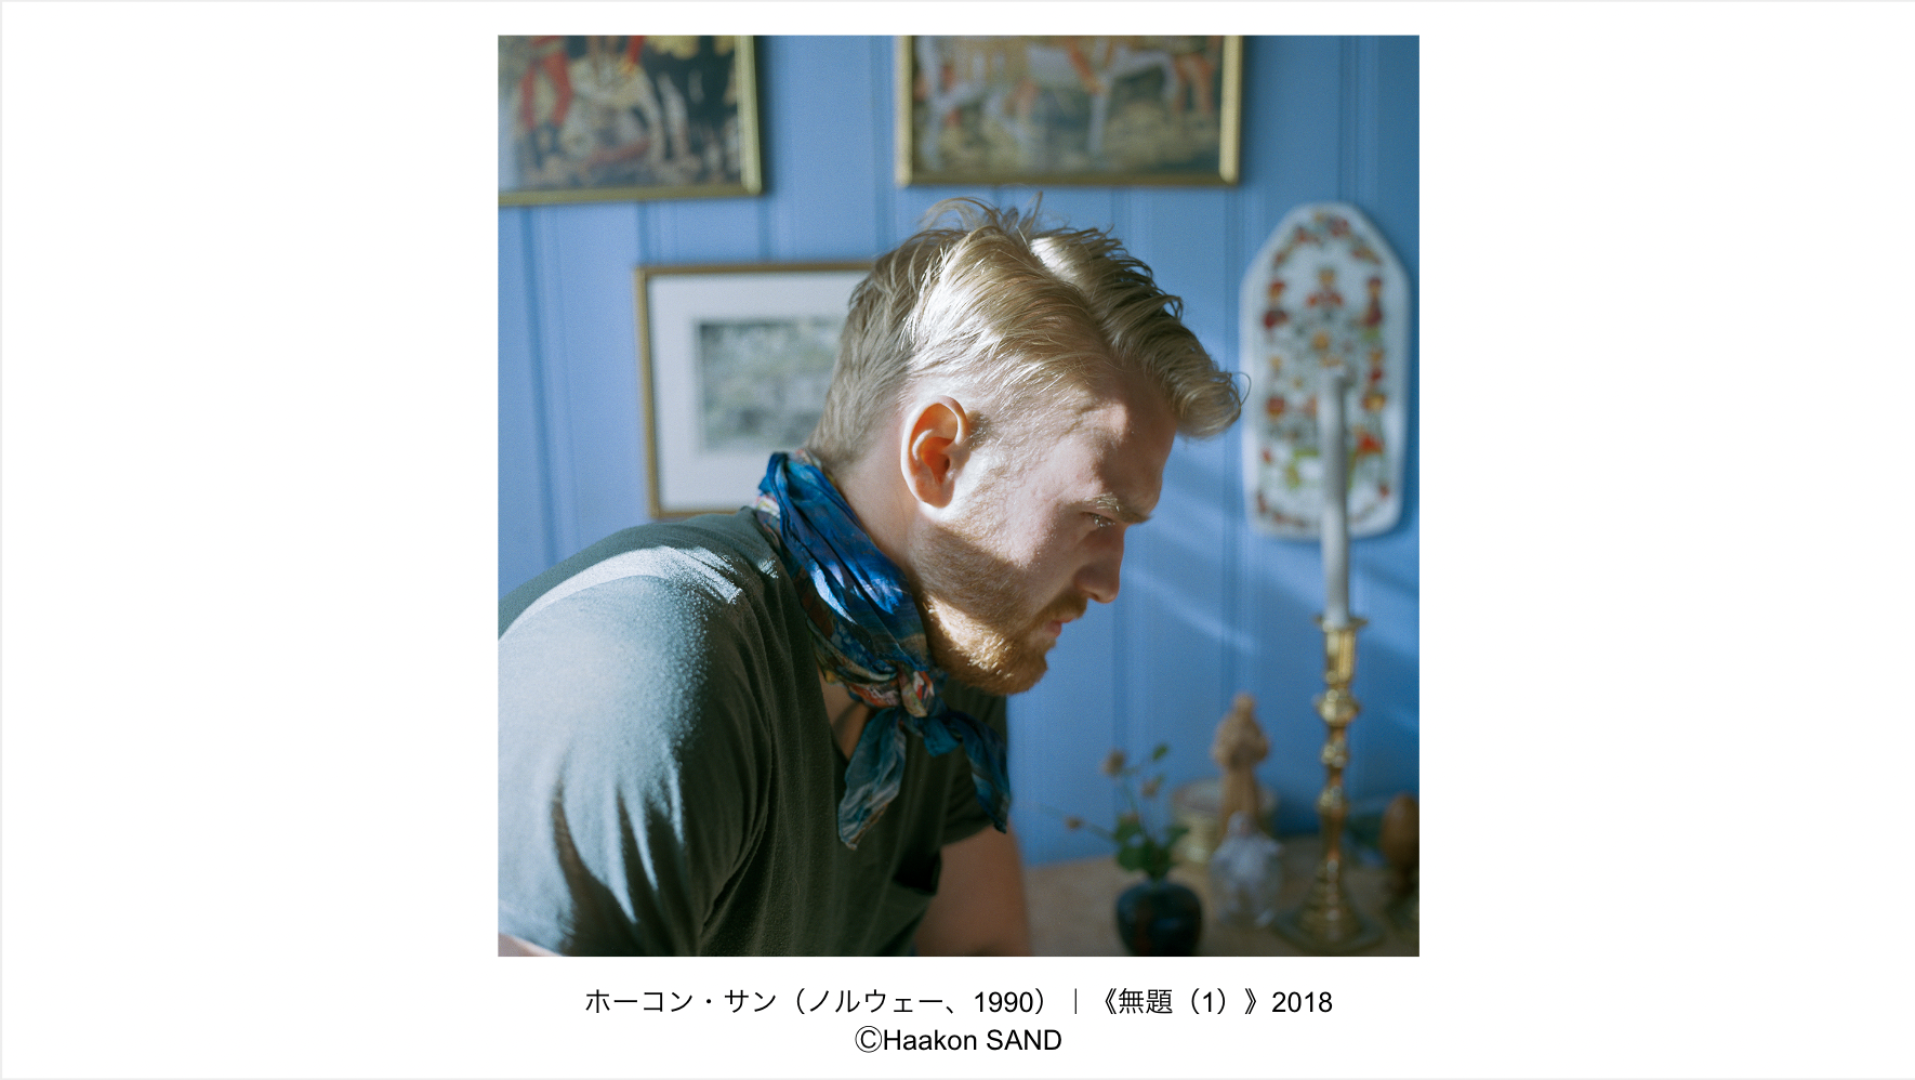 [Mikitravel only! 200 yen discount] Kiyosato Photo Museum 2023 Young Portfolio Exhibition Admission Ticket Reservation (Yamanashi Prefecture, Hokuto City Art Museum)